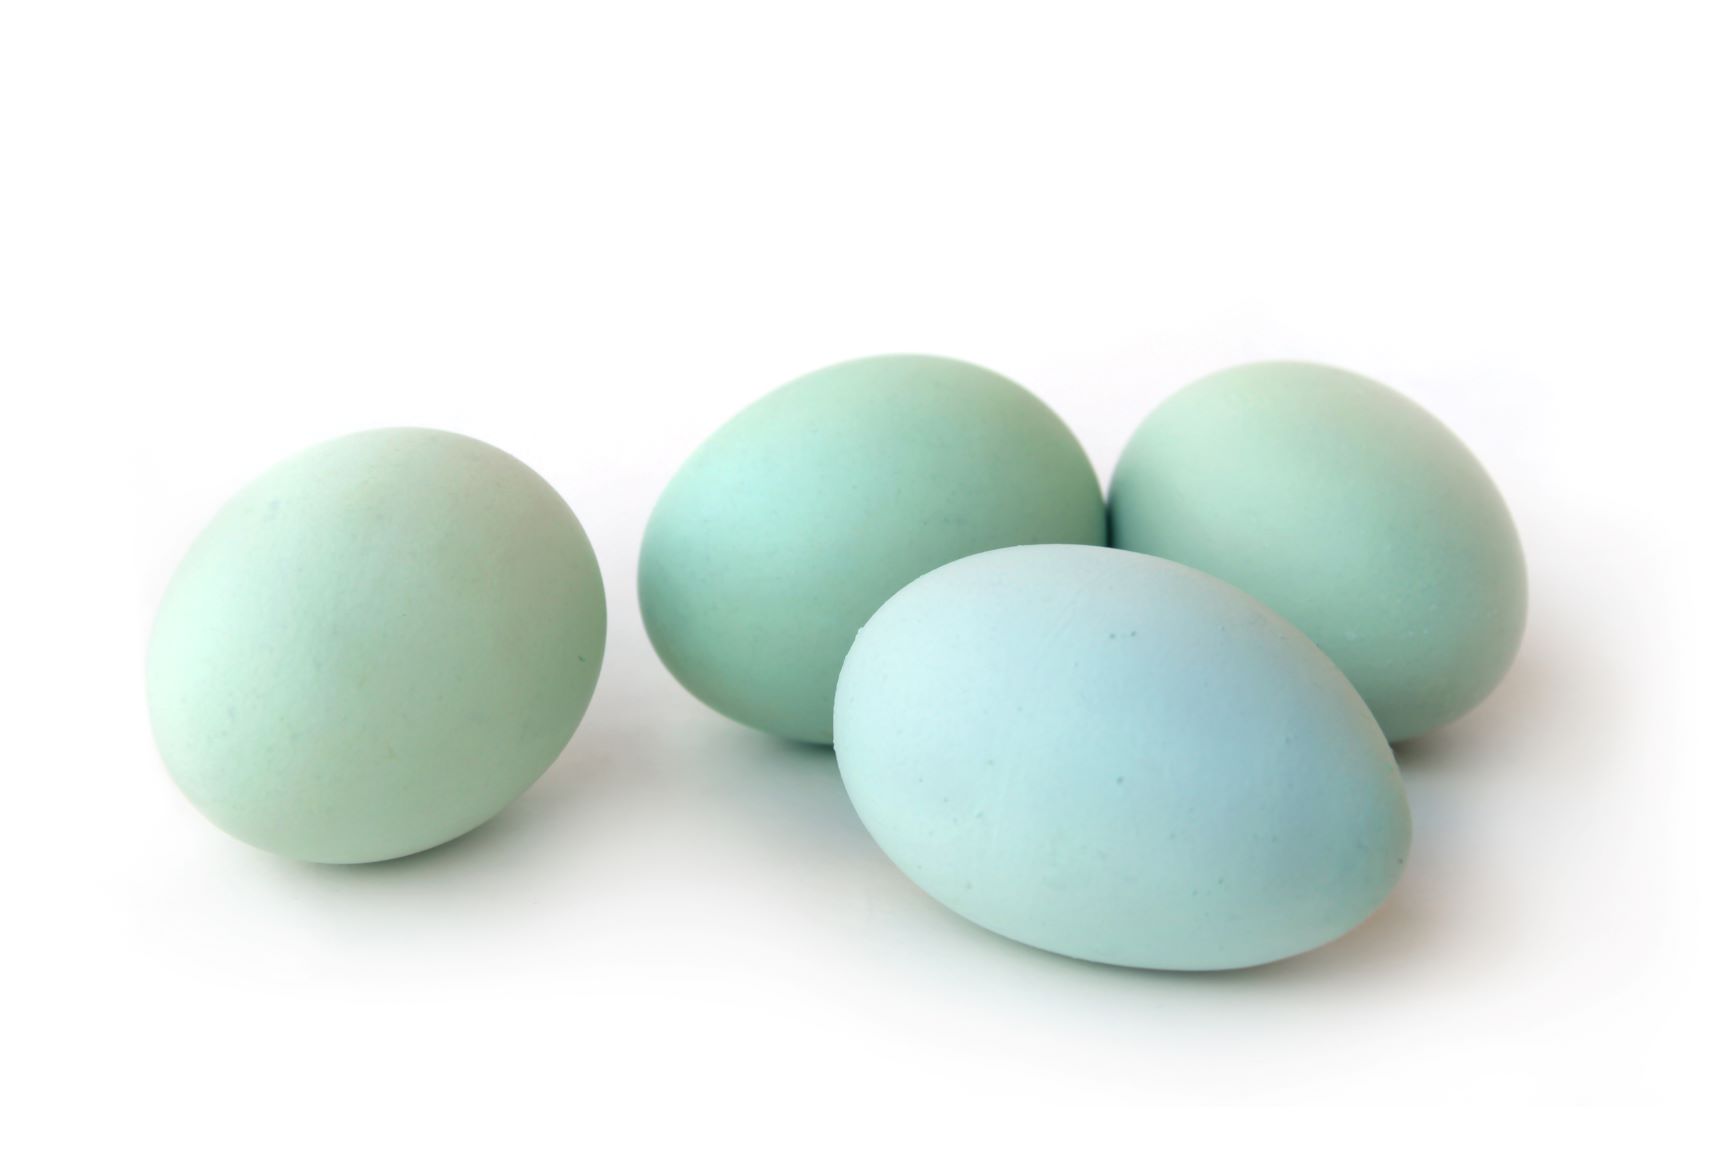 Blue Araucauna chicken eggs